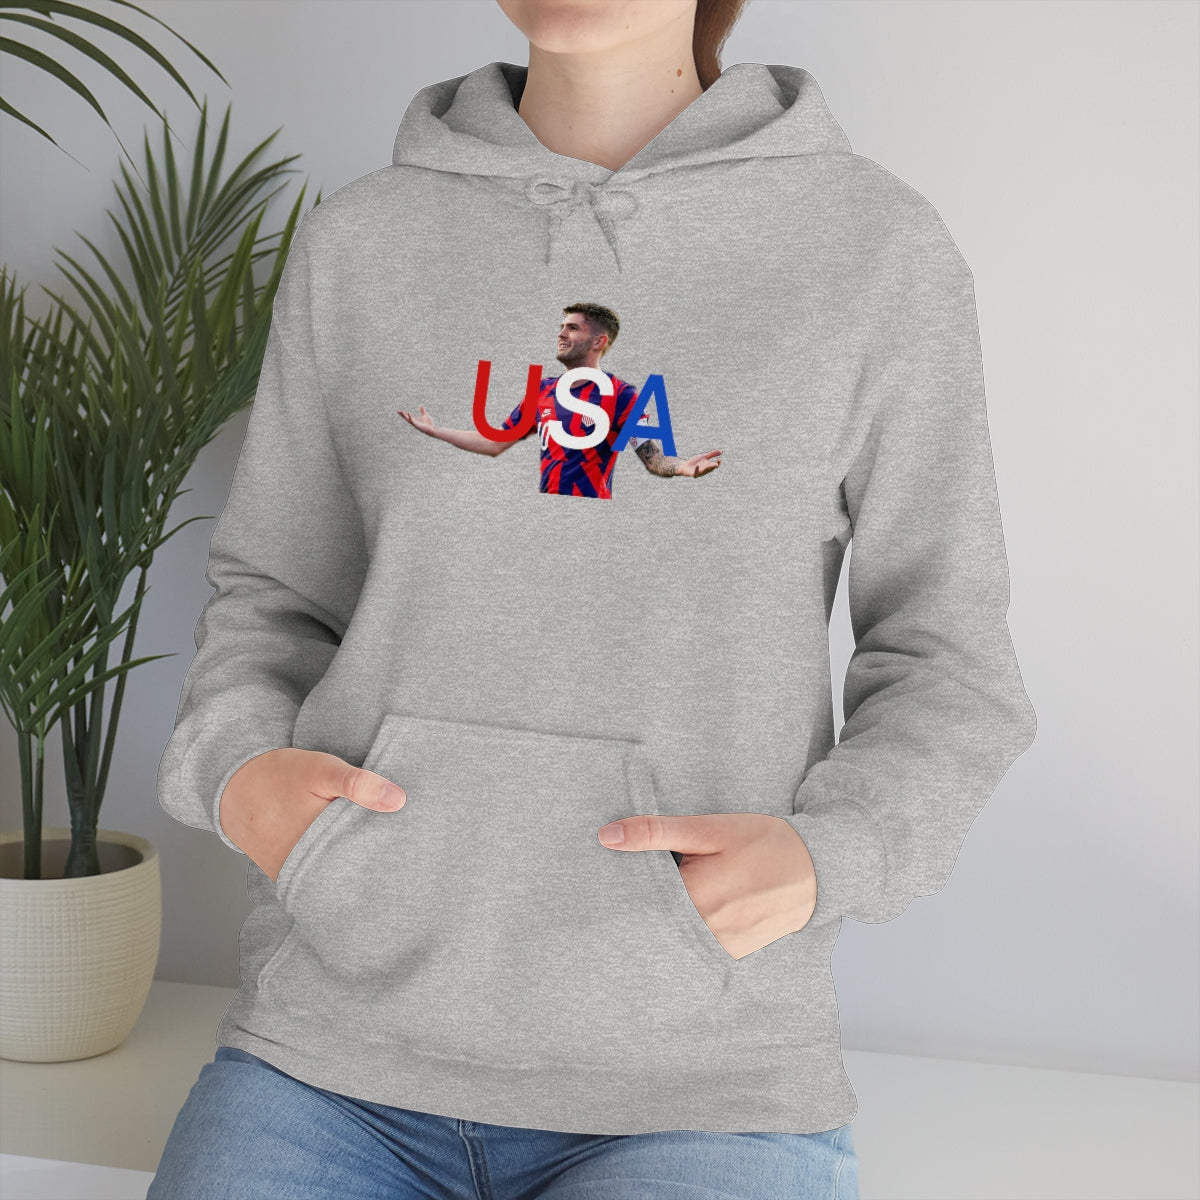 Christian Pulisic USA Soccer Sweatshirt - IsGoodBrand